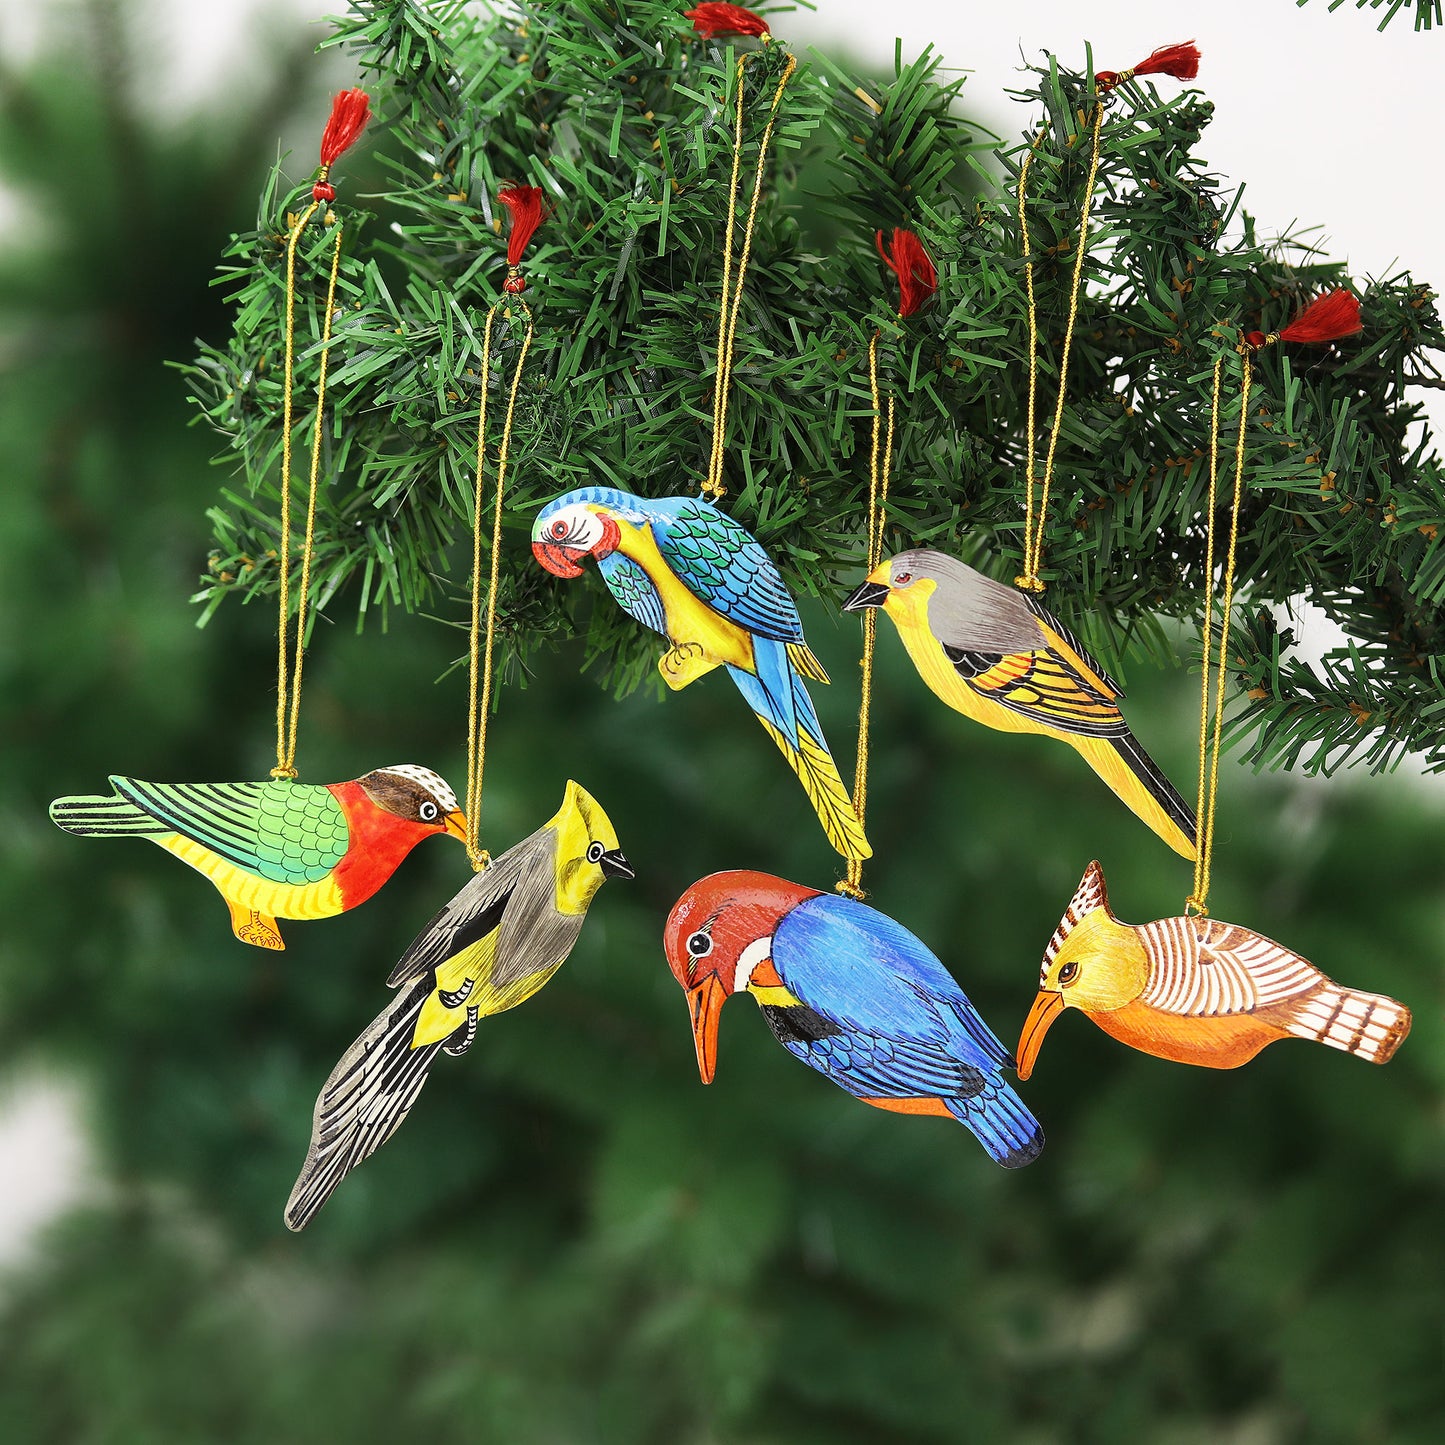 Festive Birds Hand-Painted Assorted Bird Ornaments (Set of 6)